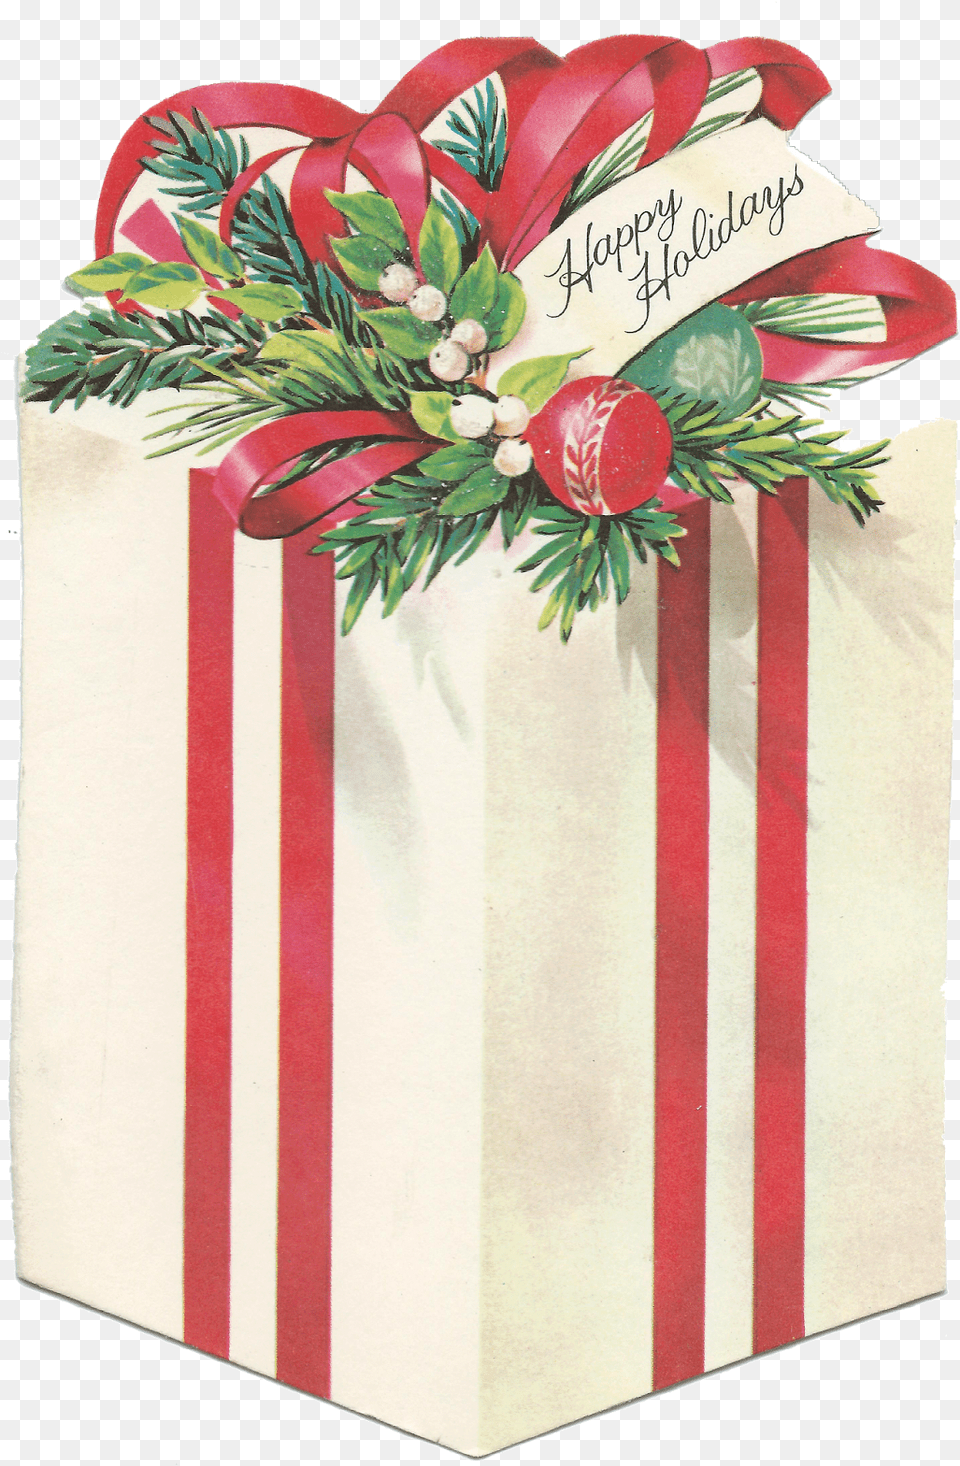 Download Hd Vintage Christmas Presents Vintage Vintage Christmas Gift Clip Art Png Image